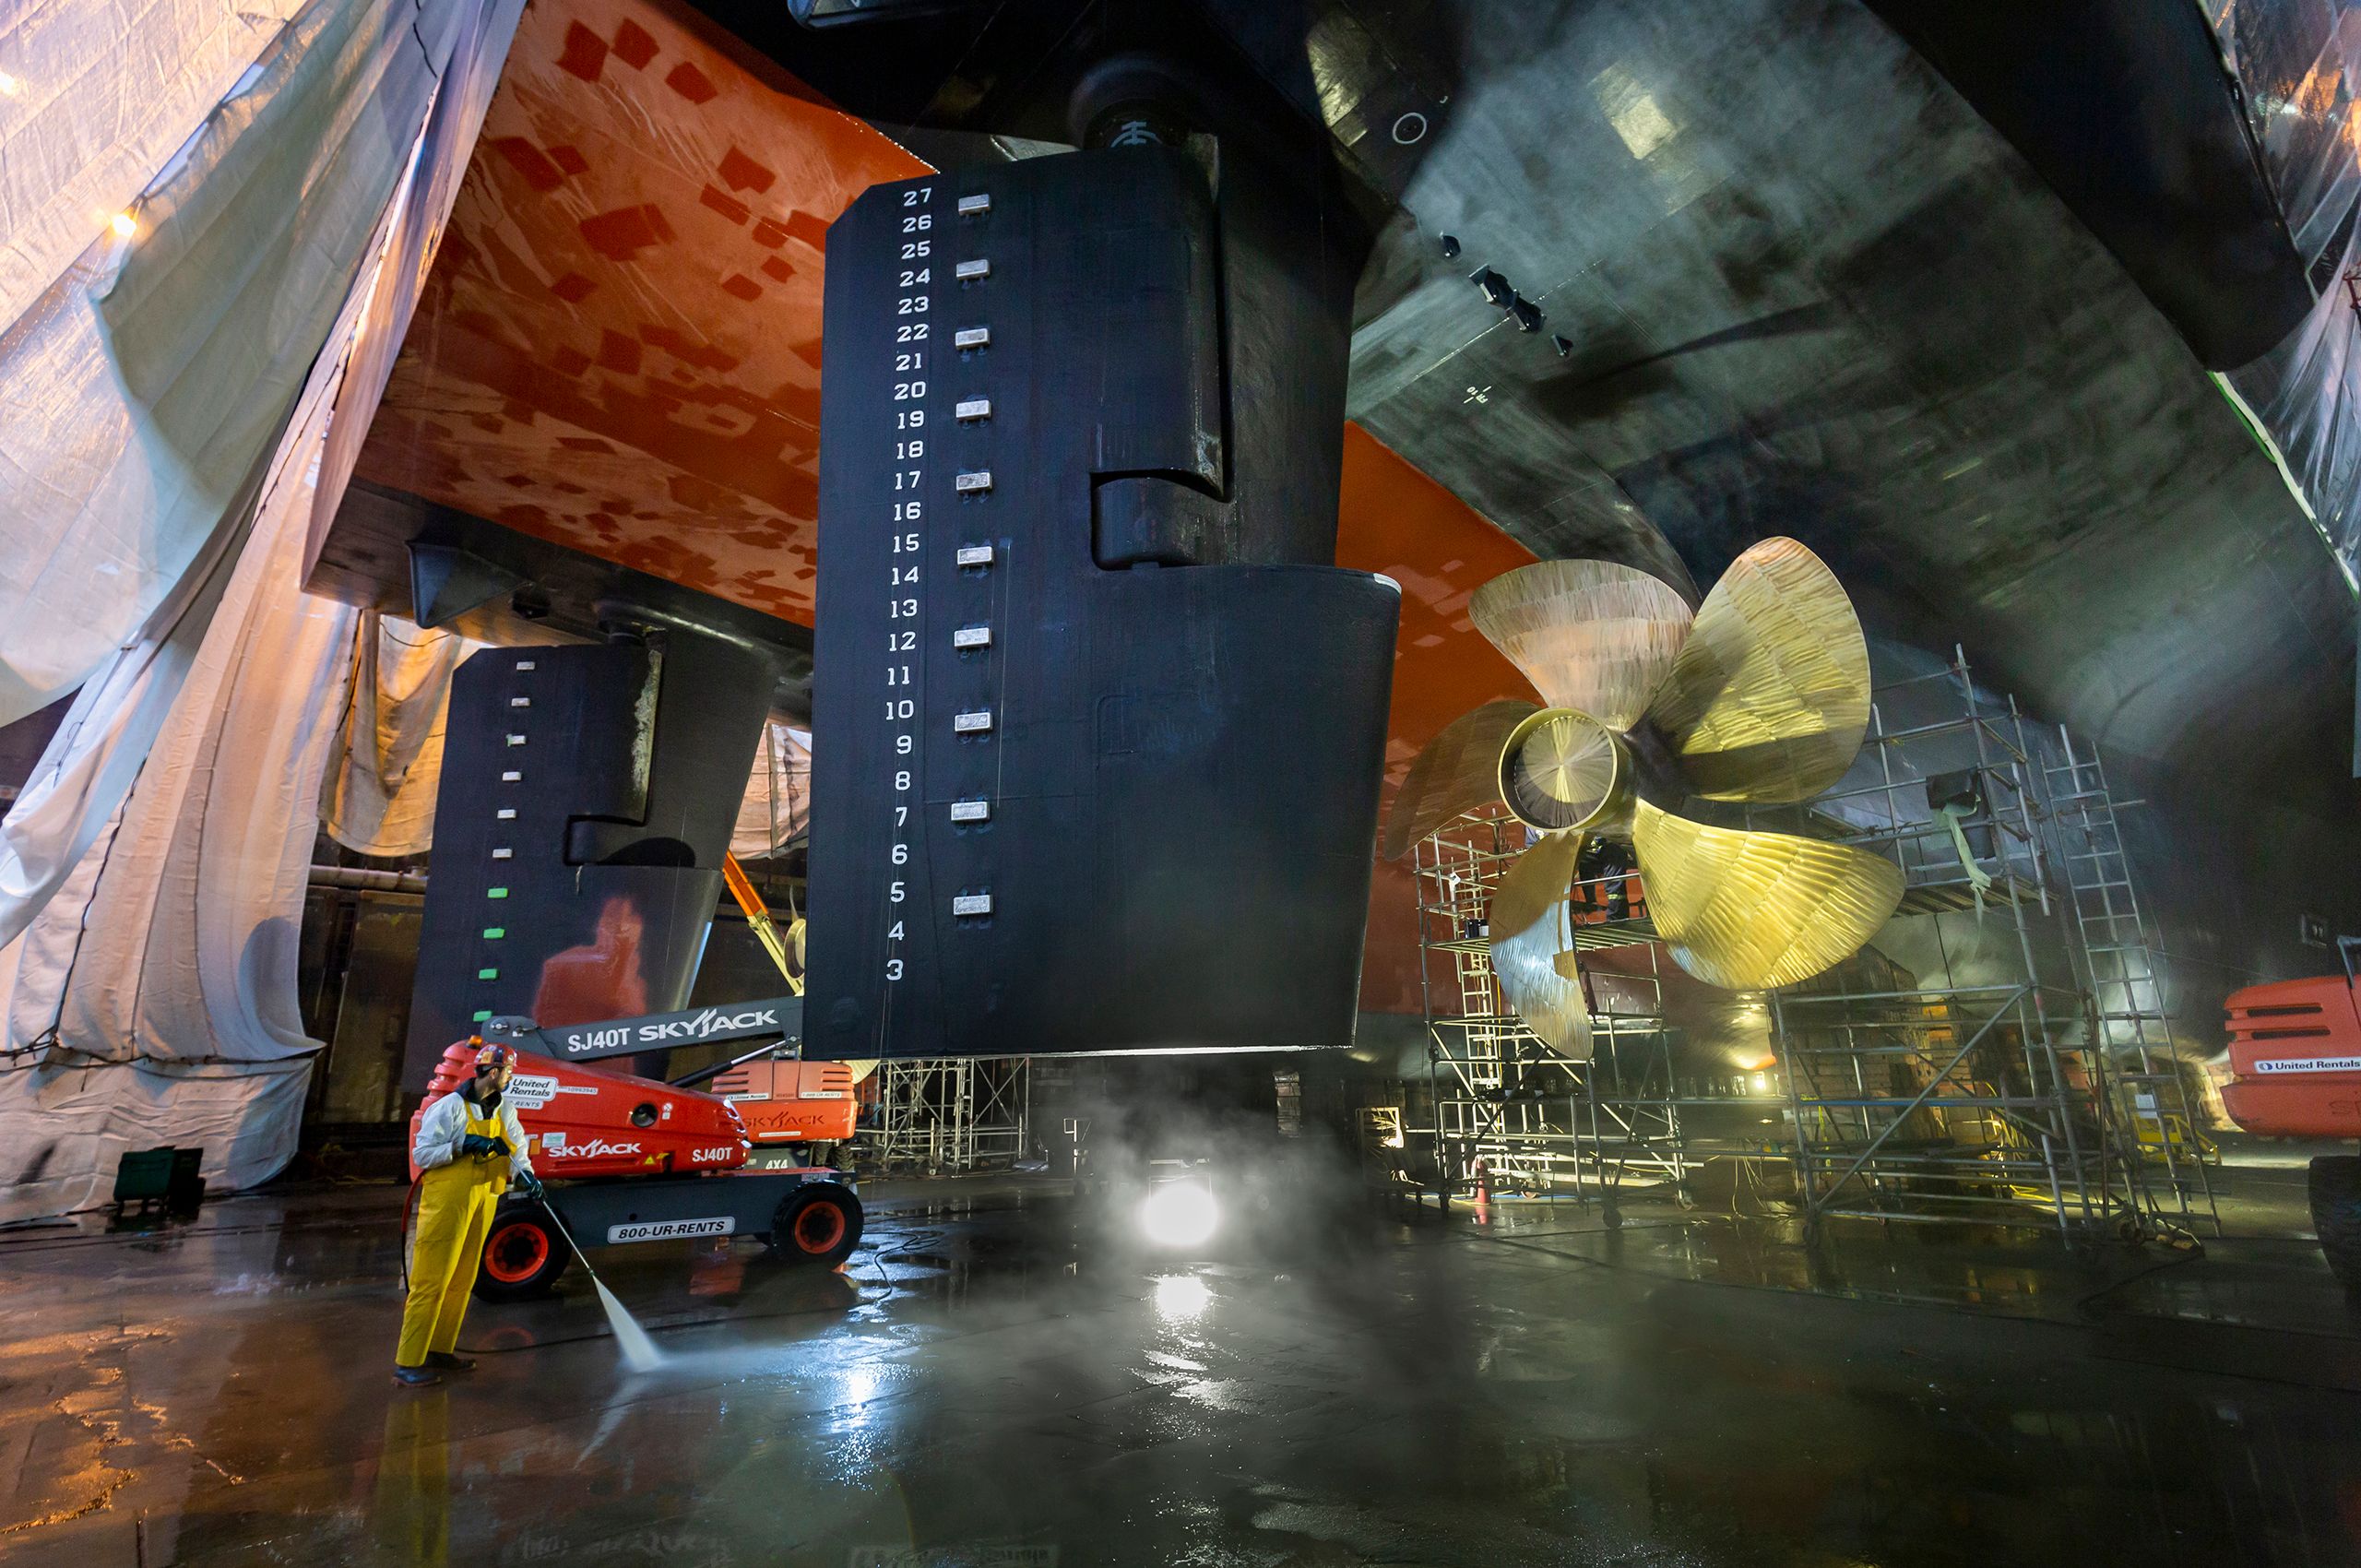 Industrial - ship hull and propeller maintenance